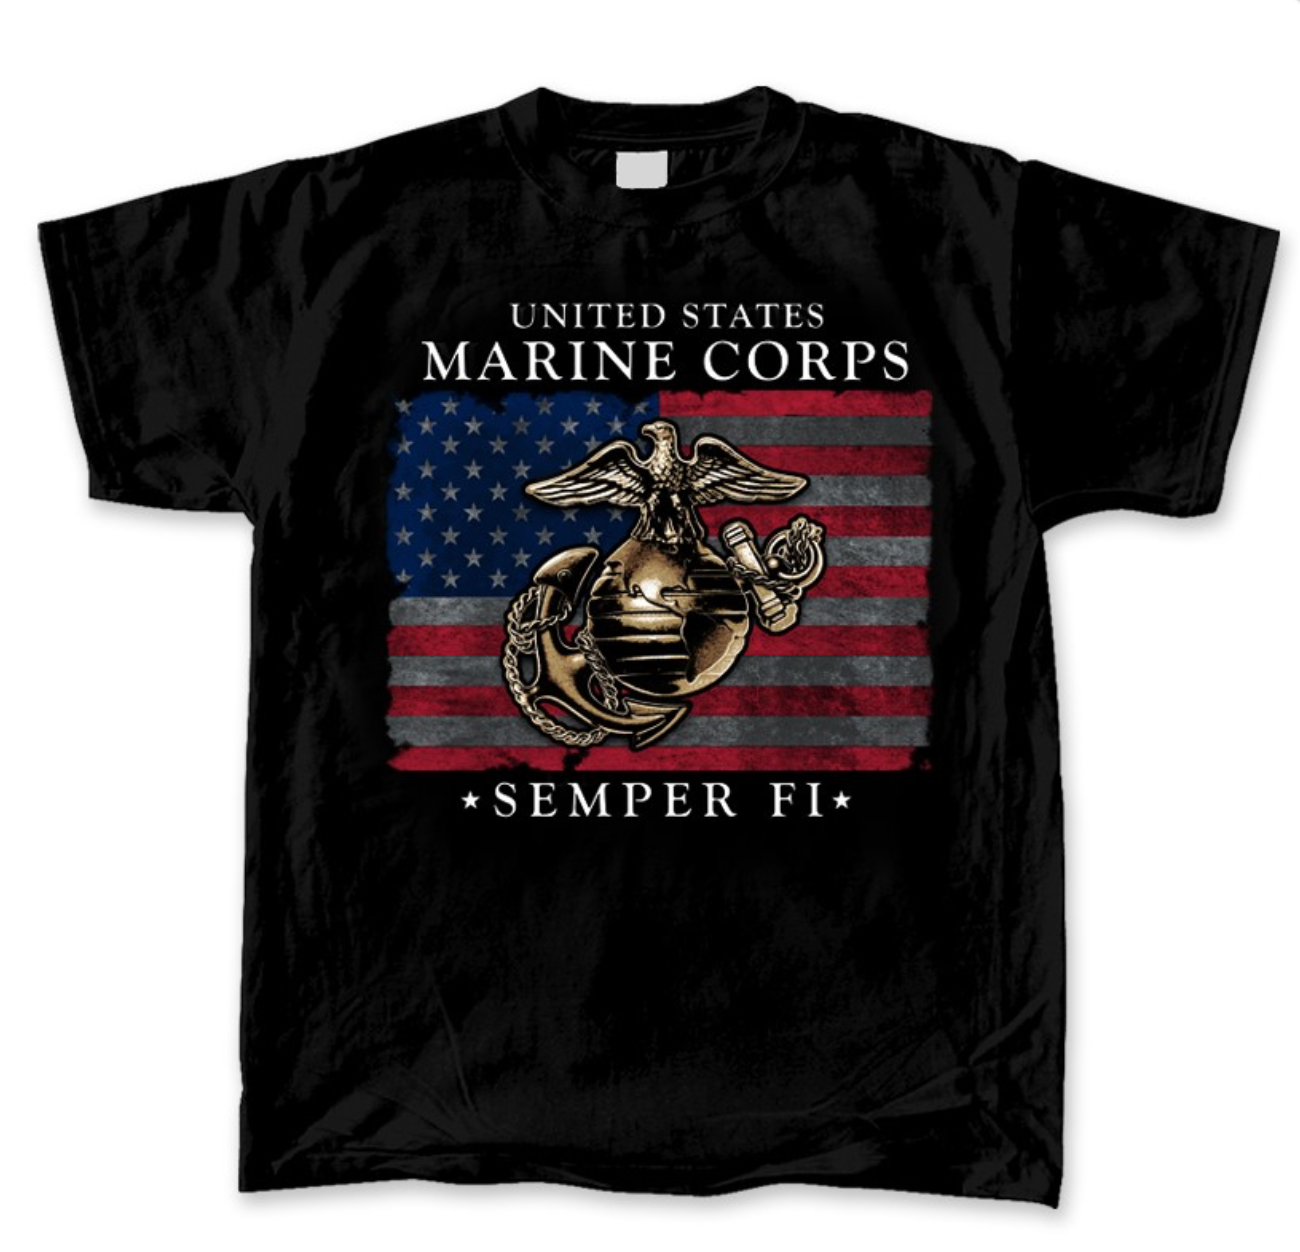 United States Marine Corps Semper Fi Tee